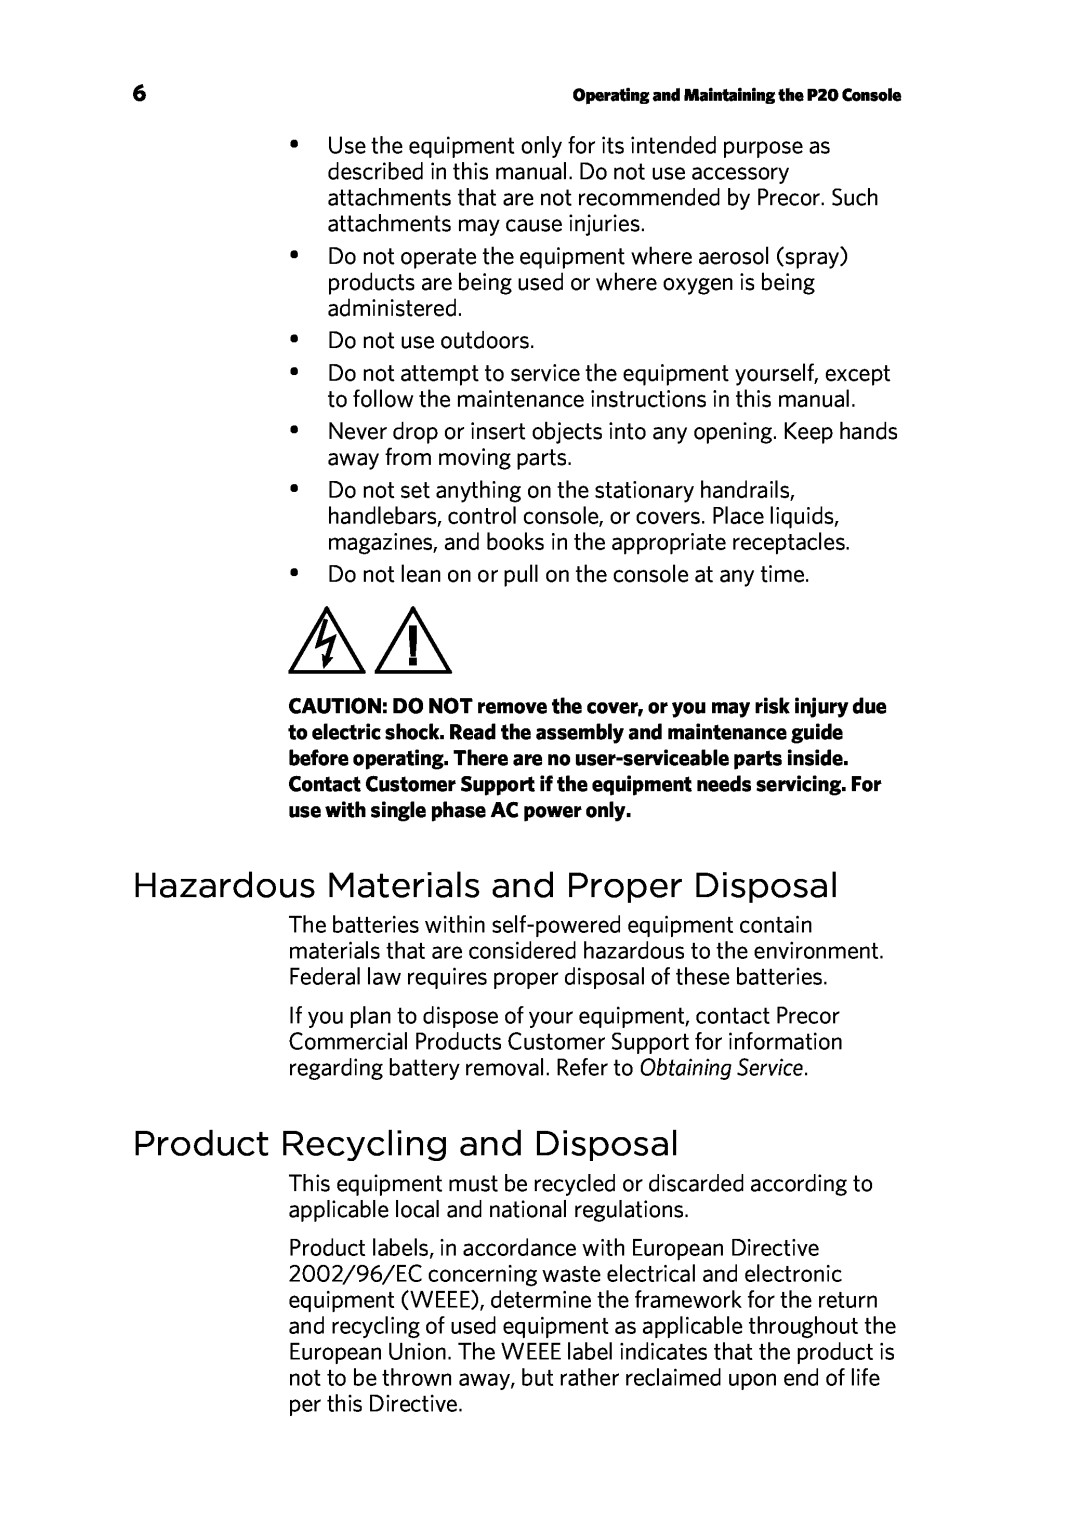 Precor 300753-201 manual Hazardous Materials and Proper Disposal, Product Recycling and Disposal 